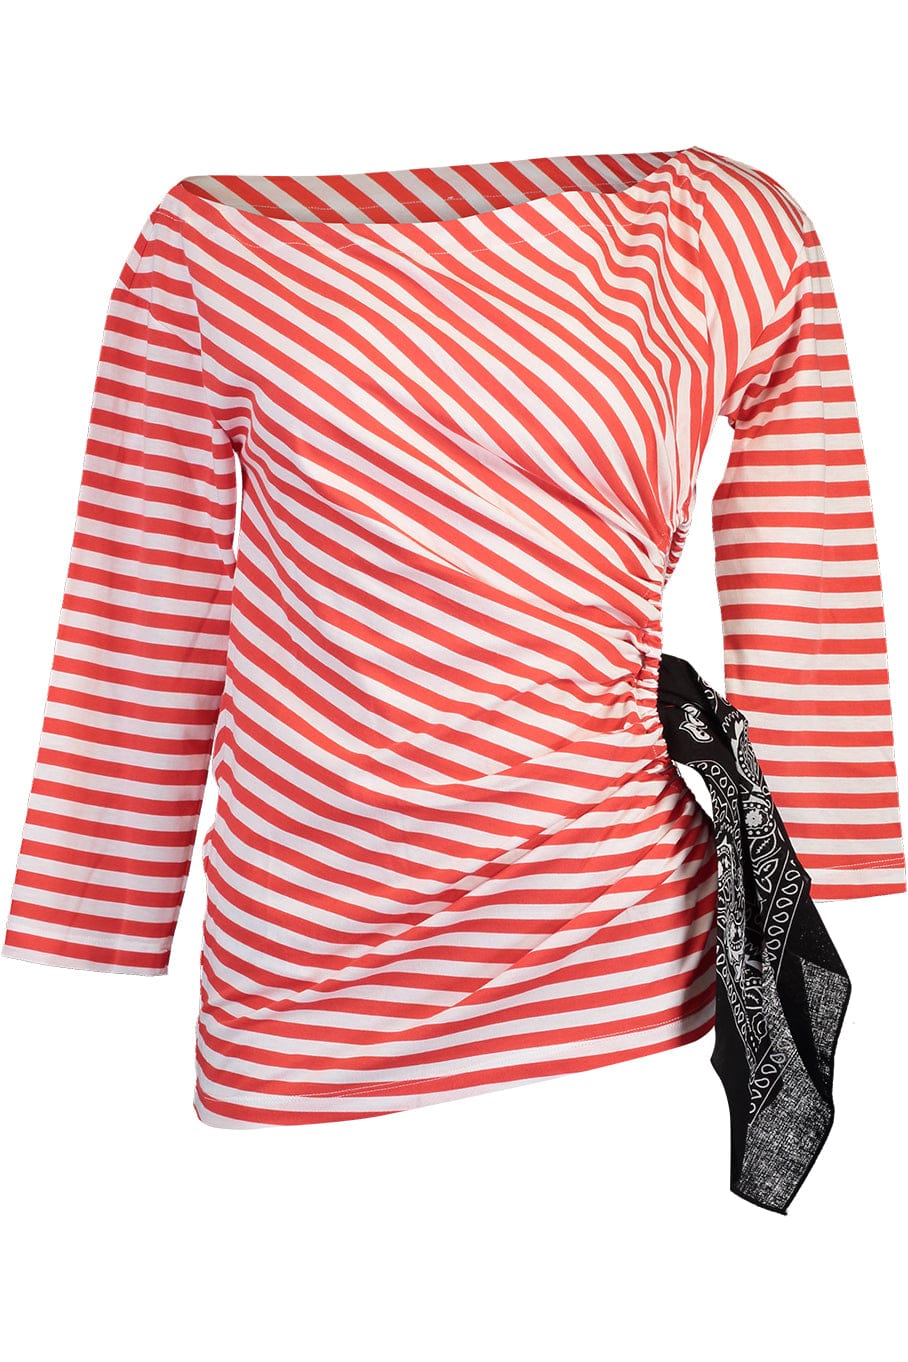 STELLA JEAN-Long Sleeve Stripe Blouse With Cutout-